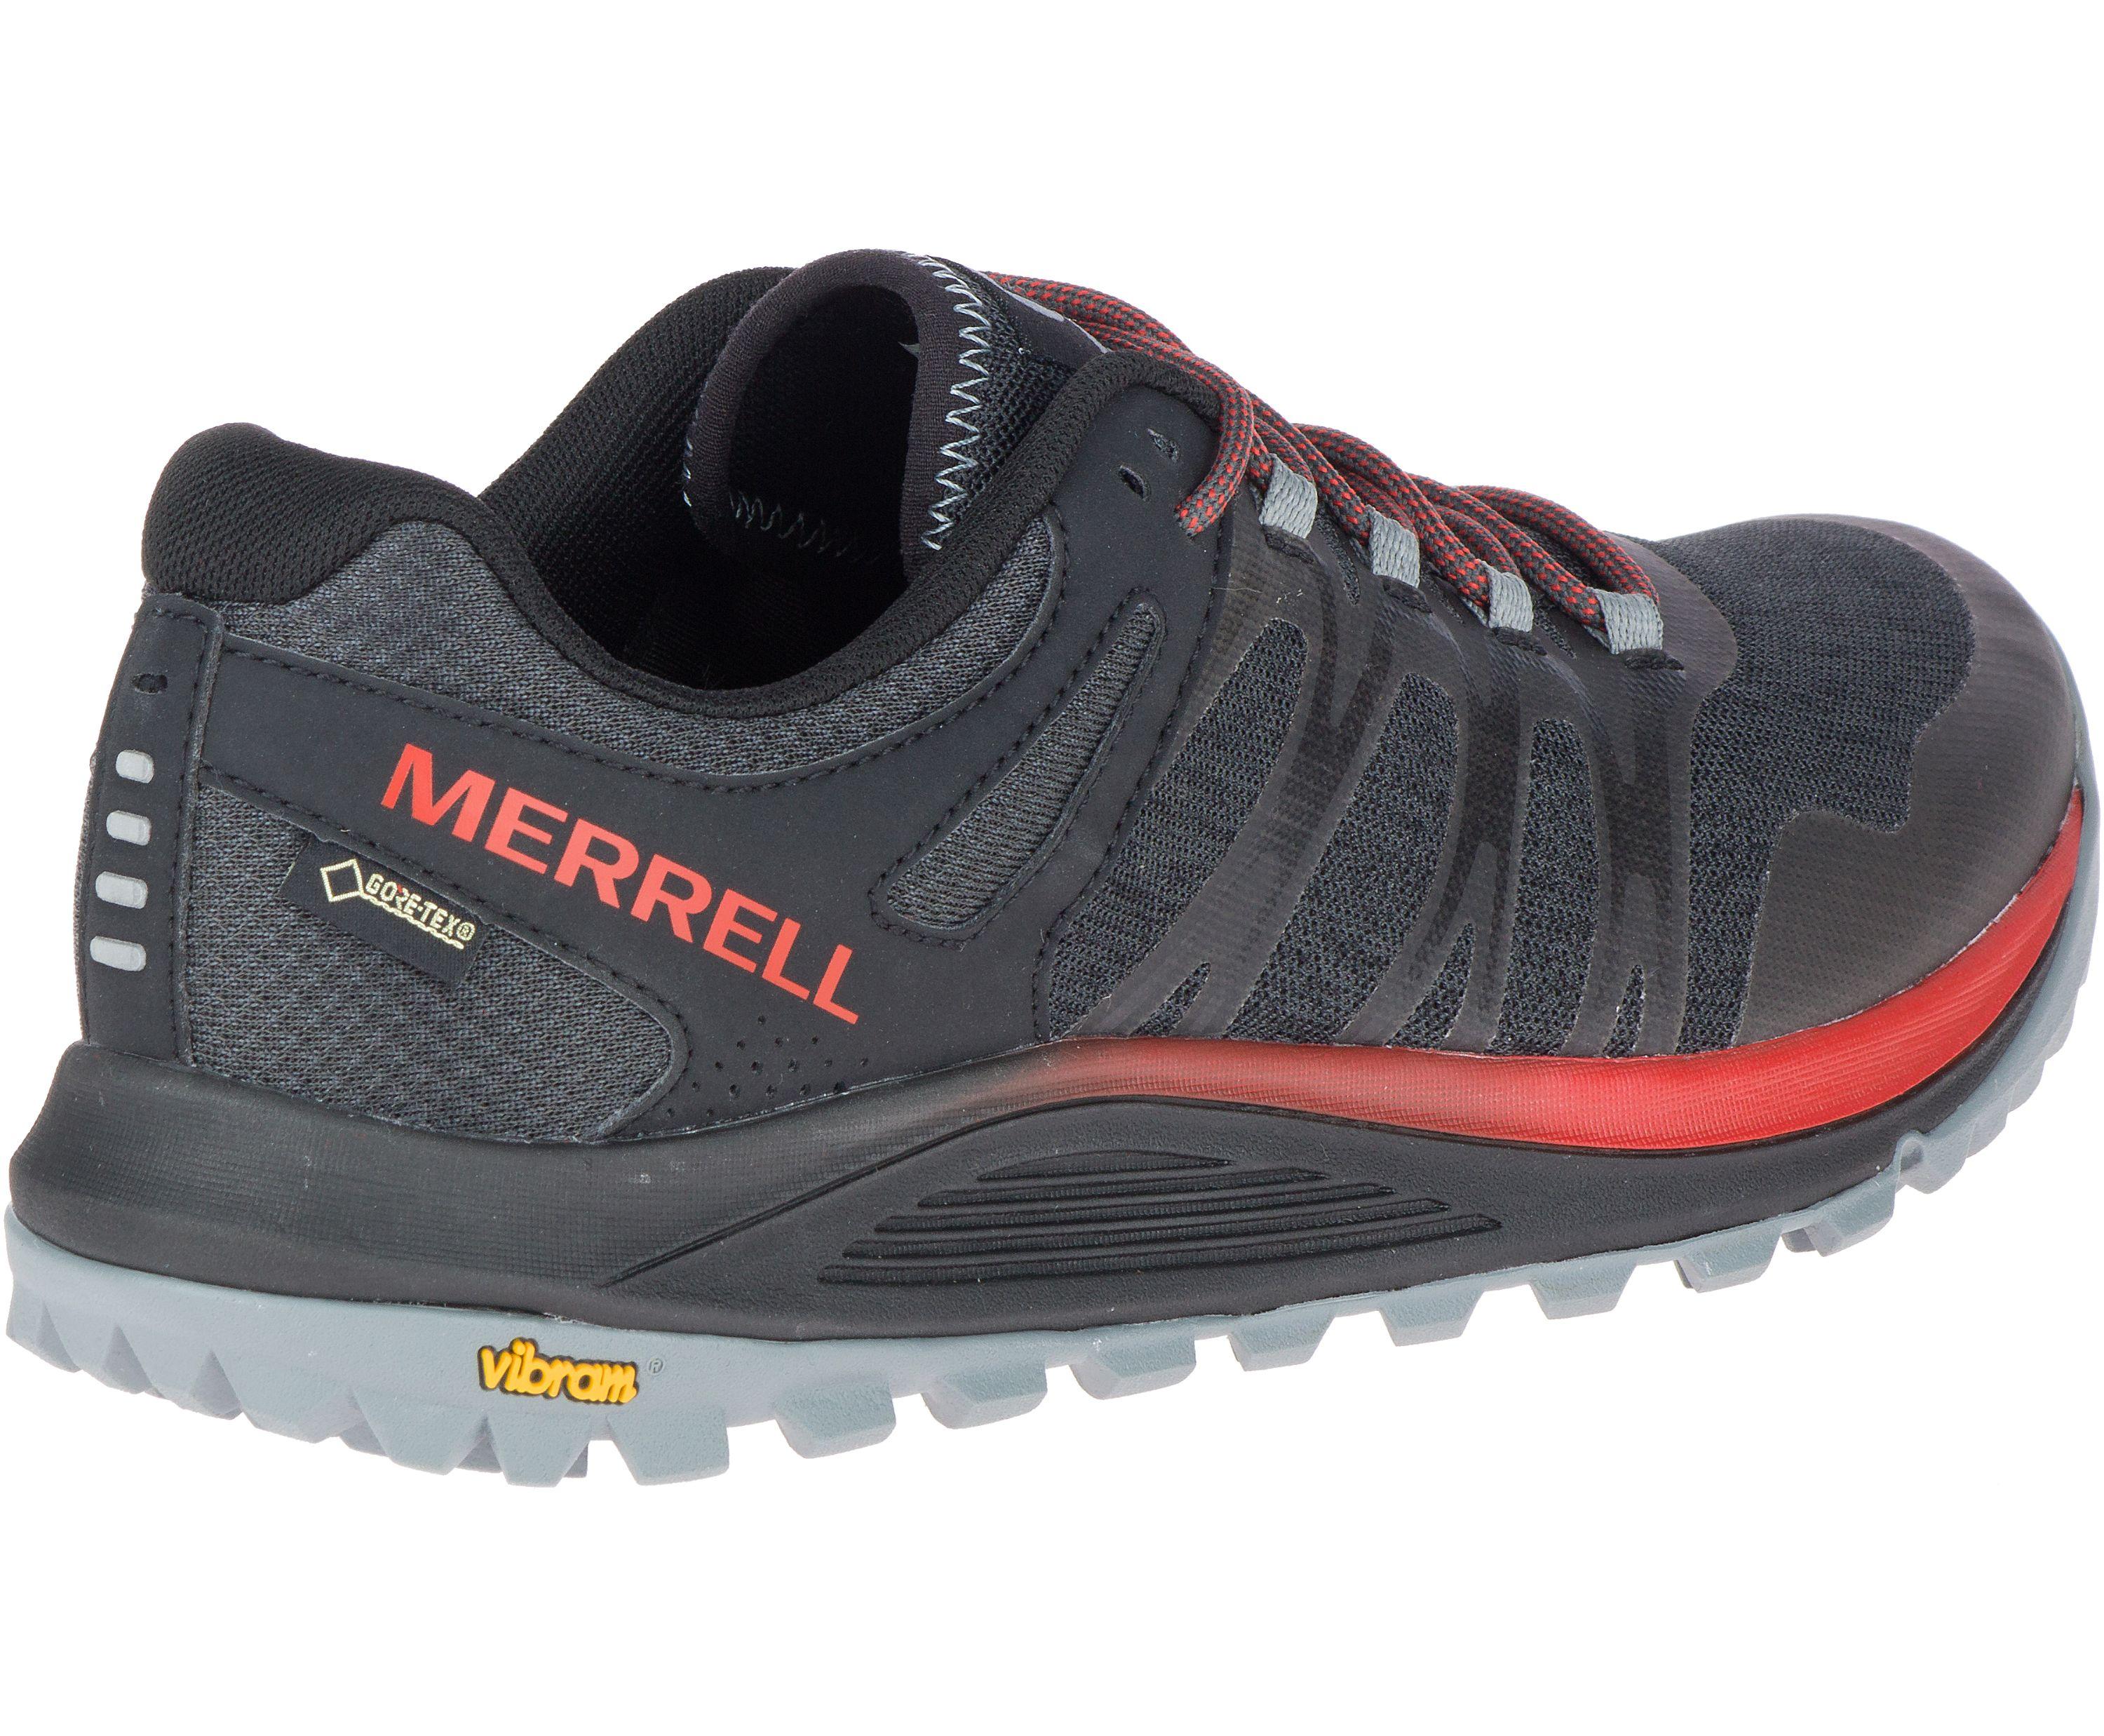 Merrell Nova GTX Scarpe da Trail Running Uomo